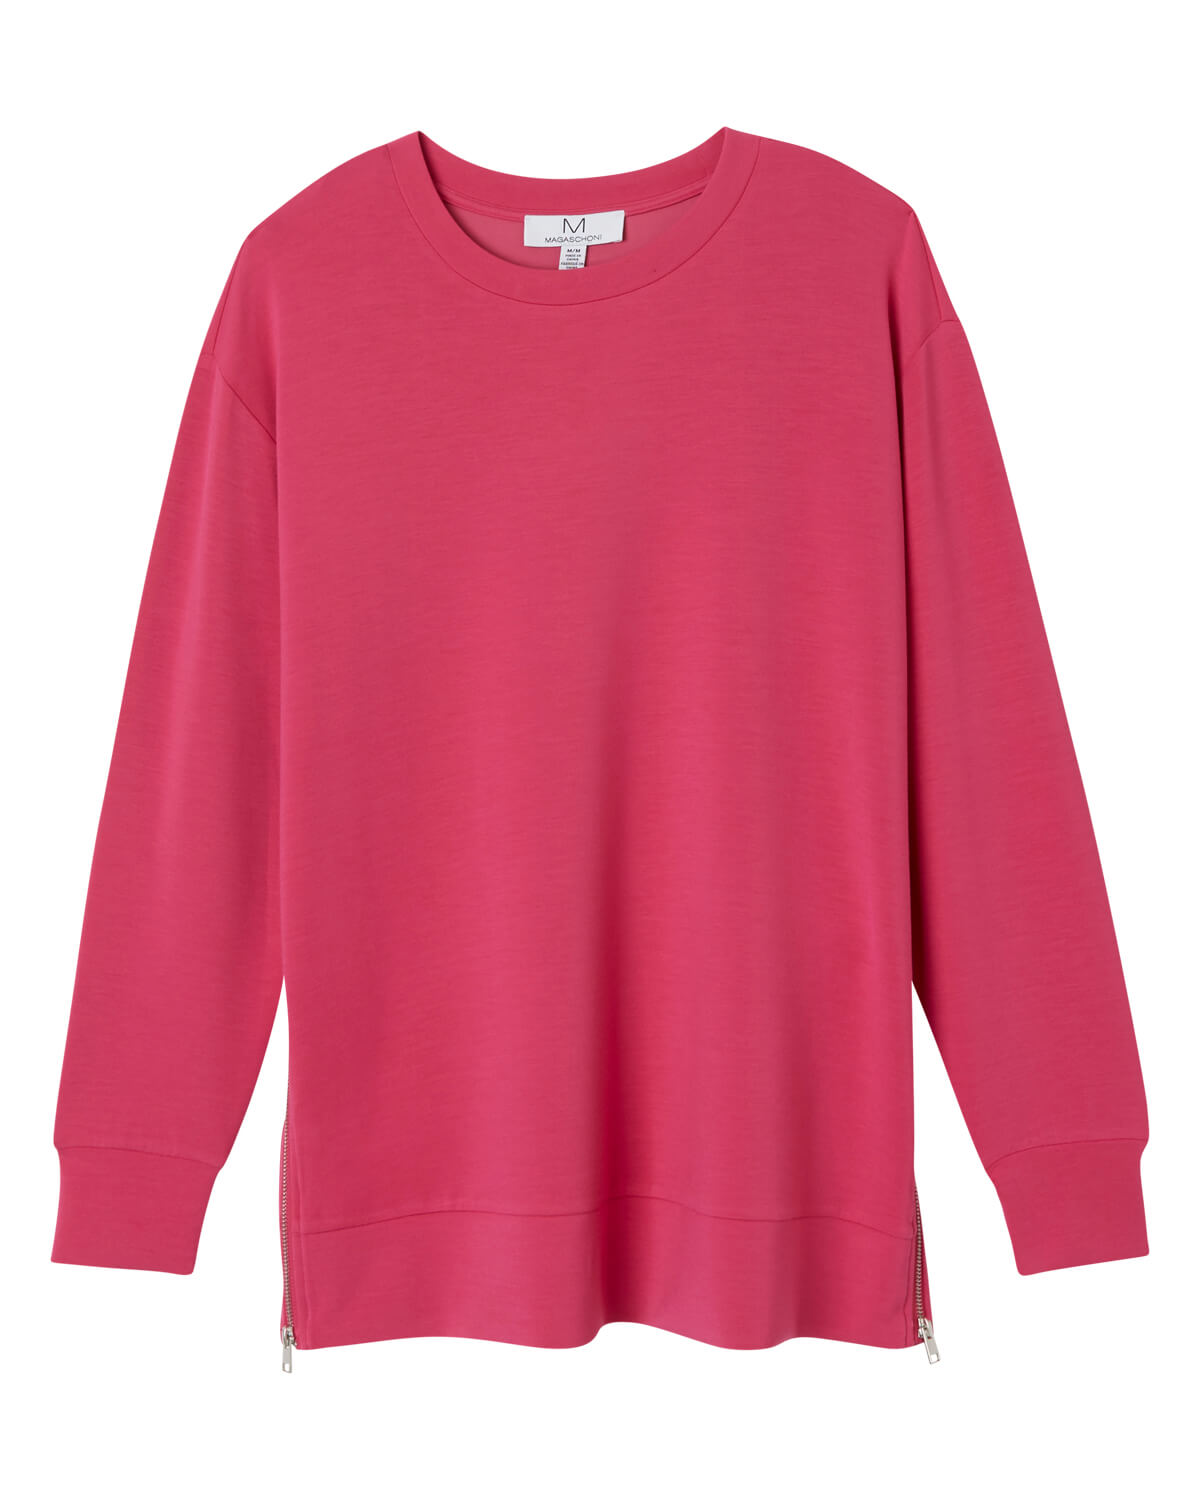 Shop Tunic Length Side Slit Pullover Top | M Magaschoni | JANE + MERCER